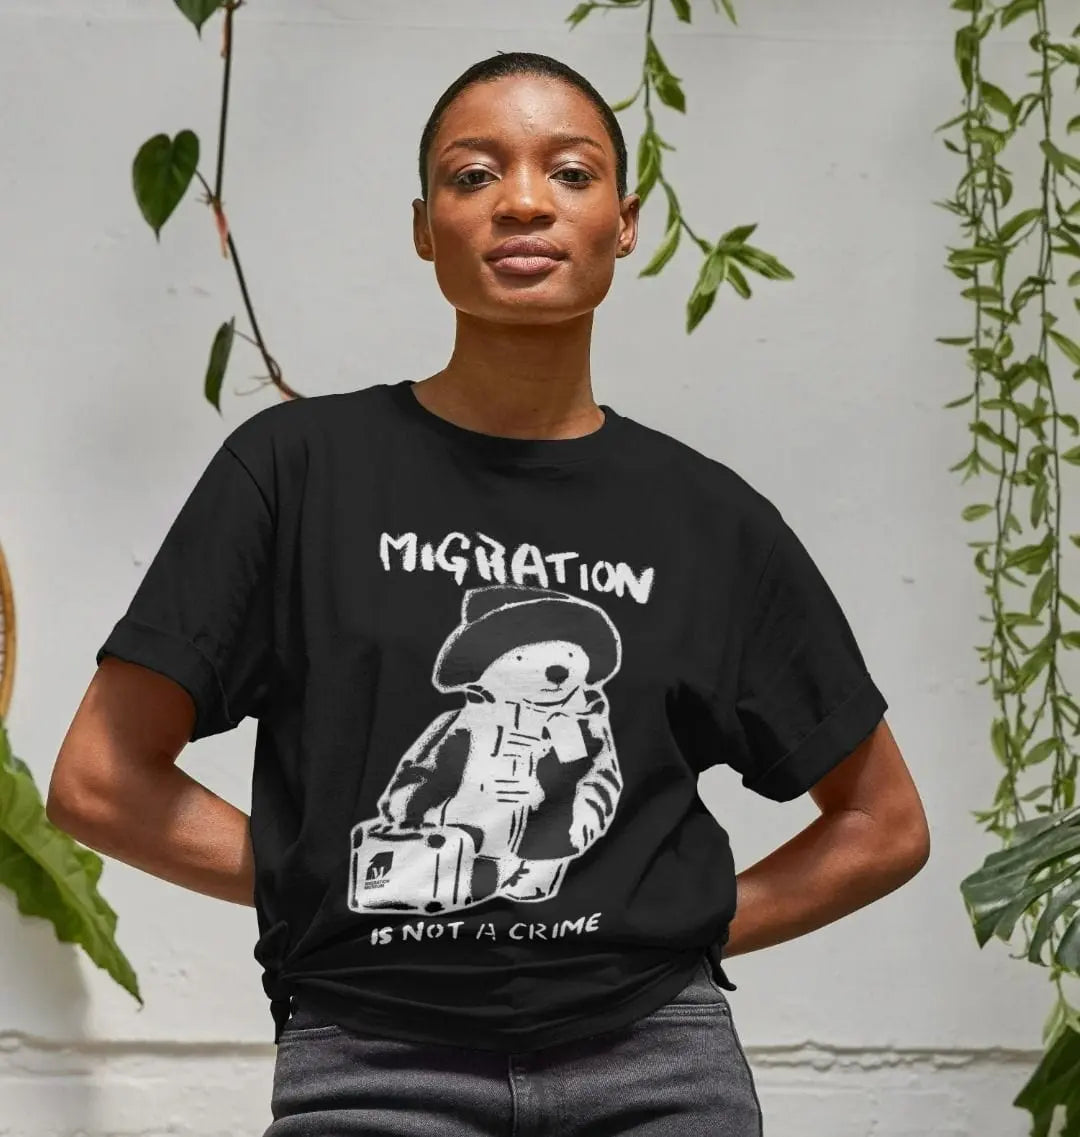 Migration Is Not A Crime - Organic Cotton Women's Black Relaxed Fit T-shirt - Migration Museum Shop